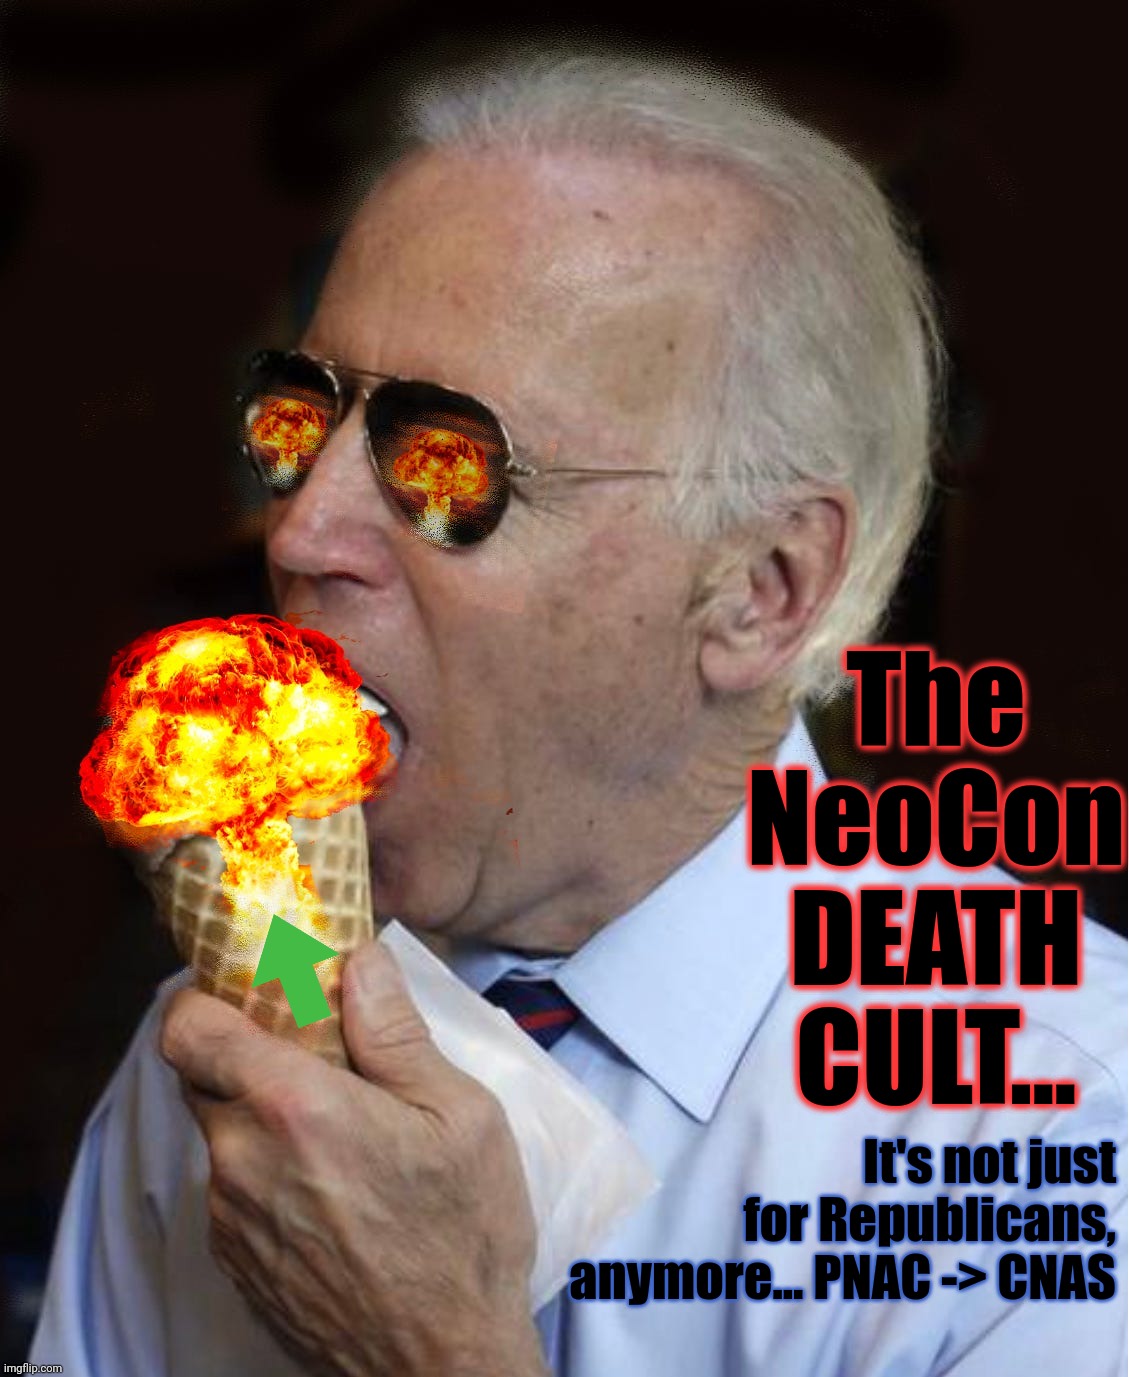 Joe Biden Apocalypse flavored Ice Cream | The NeoCon DEATH CULT... It's not just for Republicans, anymore... PNAC -> CNAS | image tagged in joe biden apocalypse flavored ice cream | made w/ Imgflip meme maker